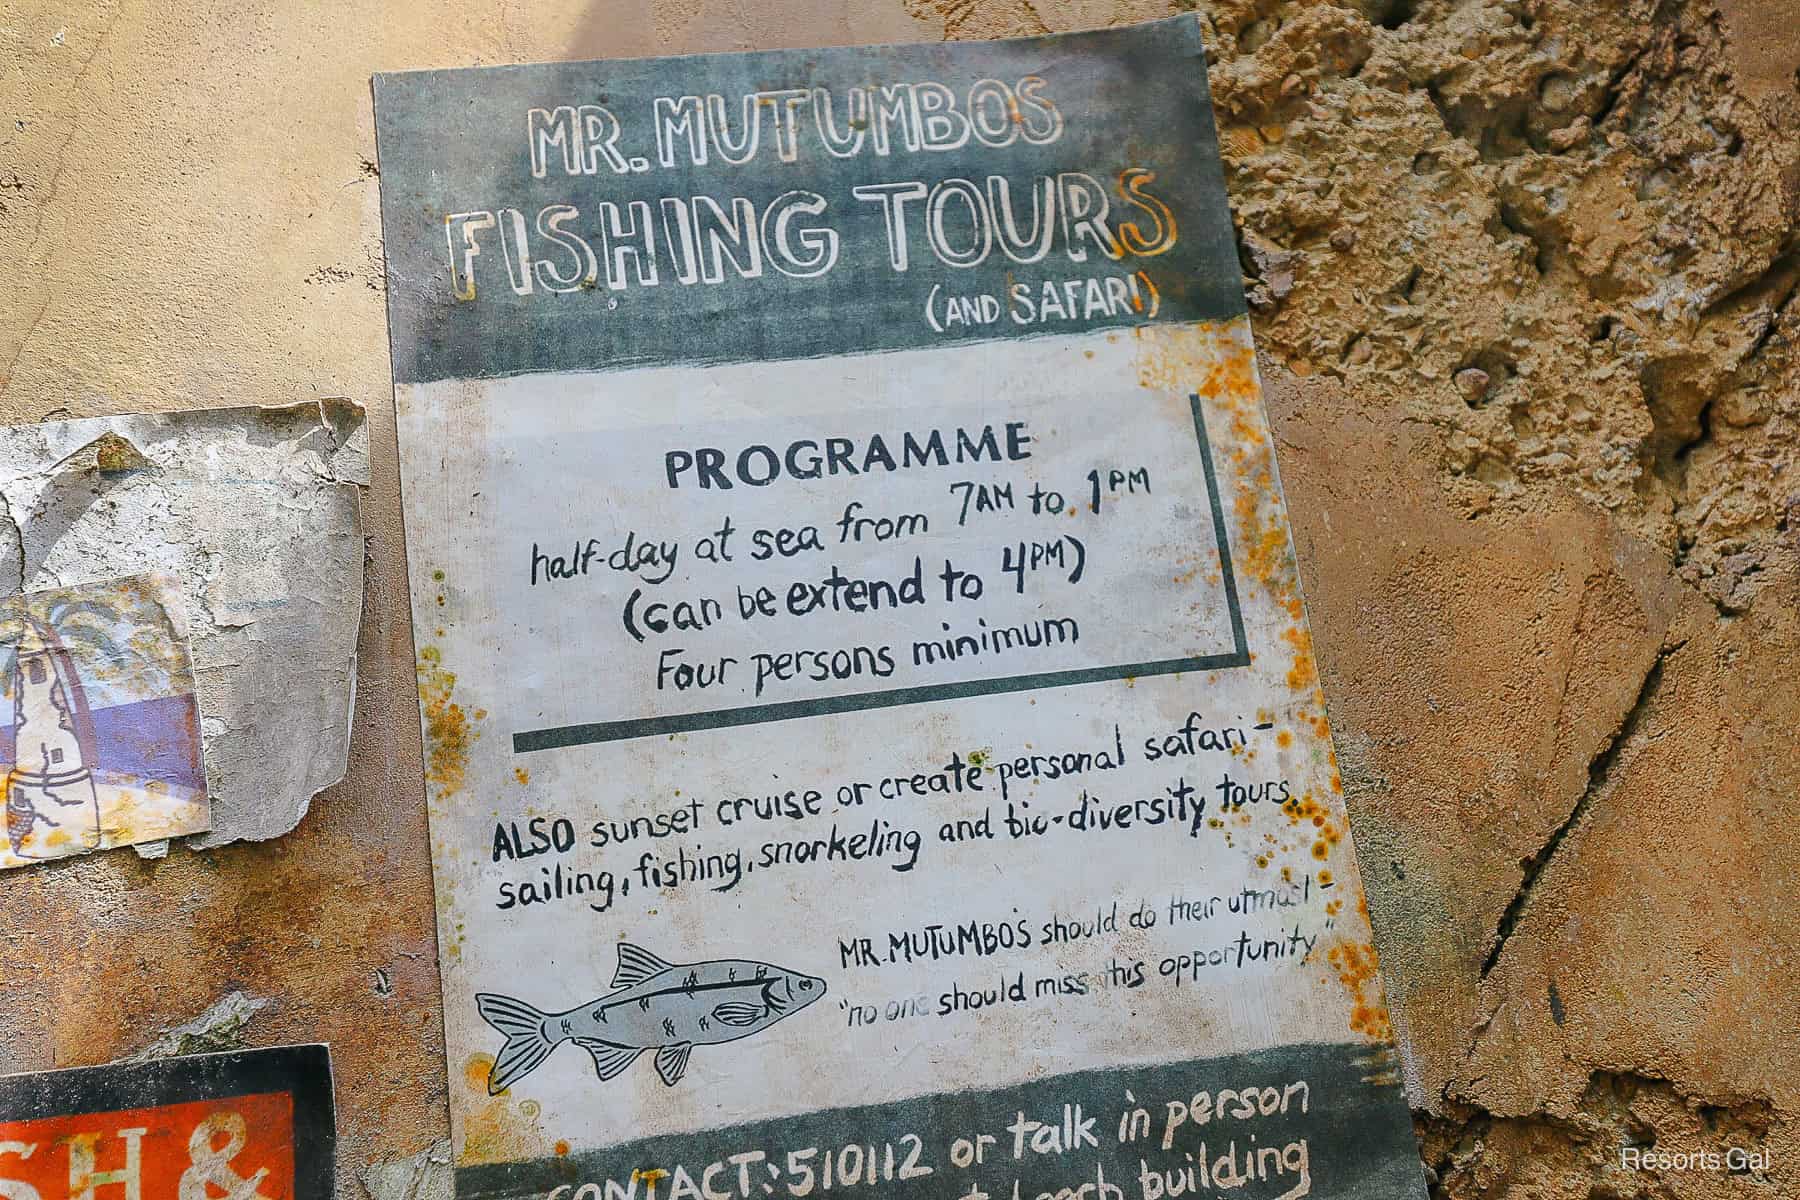 a sign that says Mr. Mutumbos Fishing Tours (and Safari)